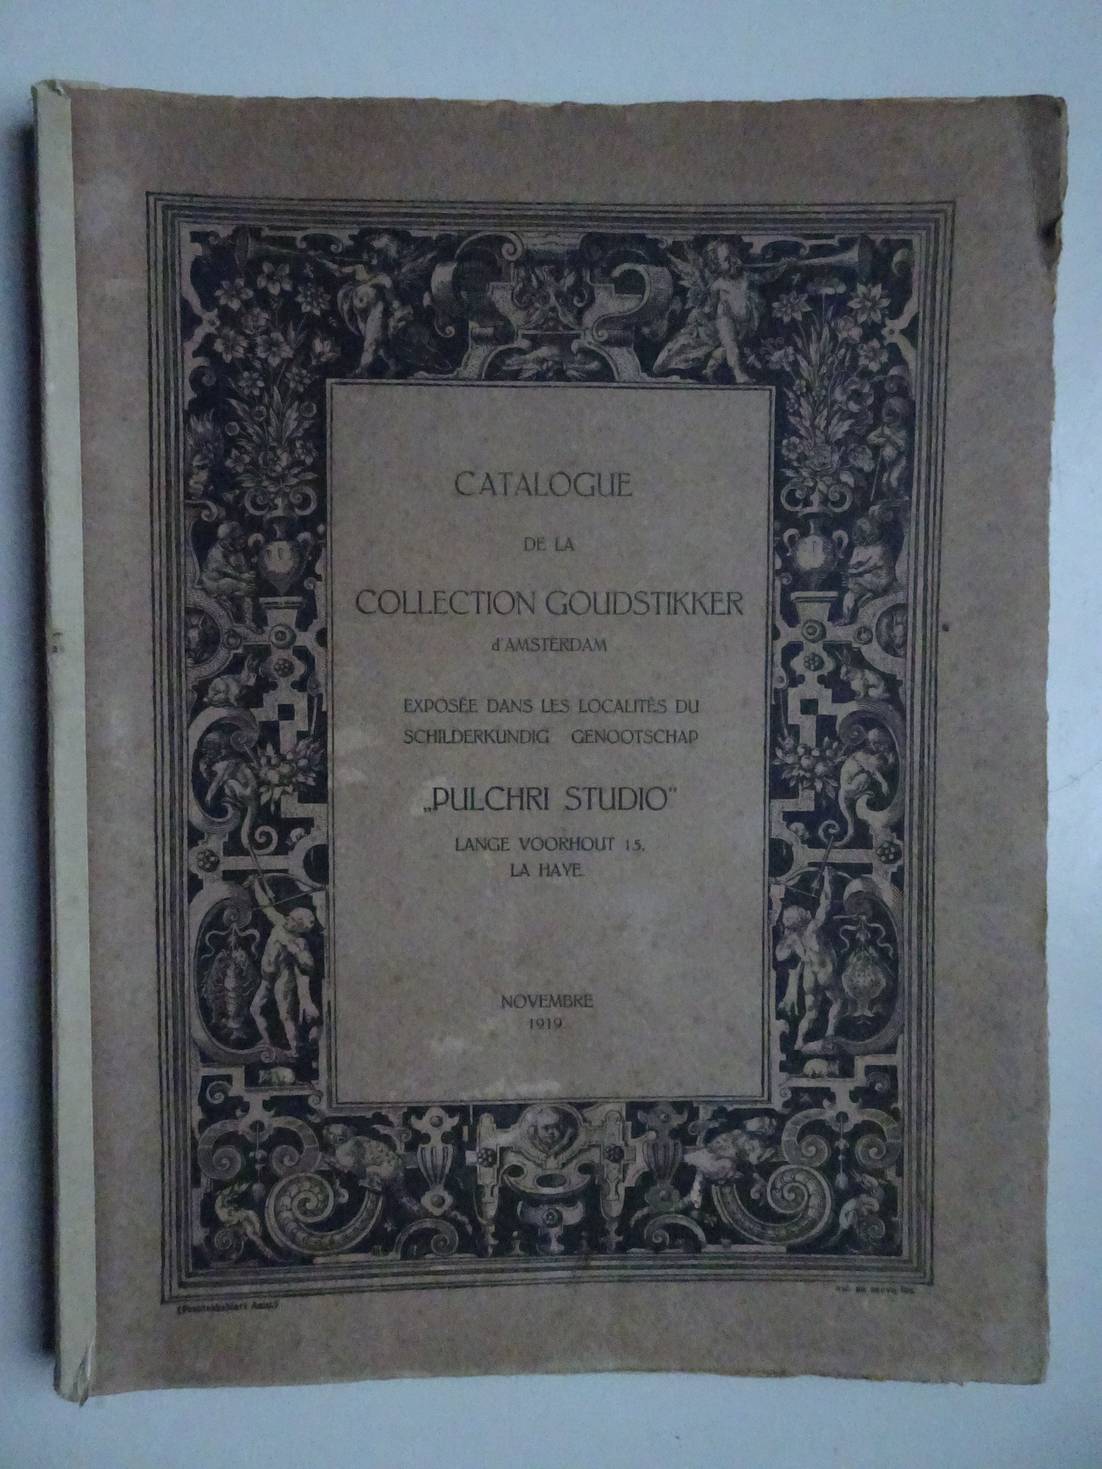 -. - Catalogue de la collection Goudstikker d'Amsterdam expose dans les localits du Schilderkundig Genootschap 